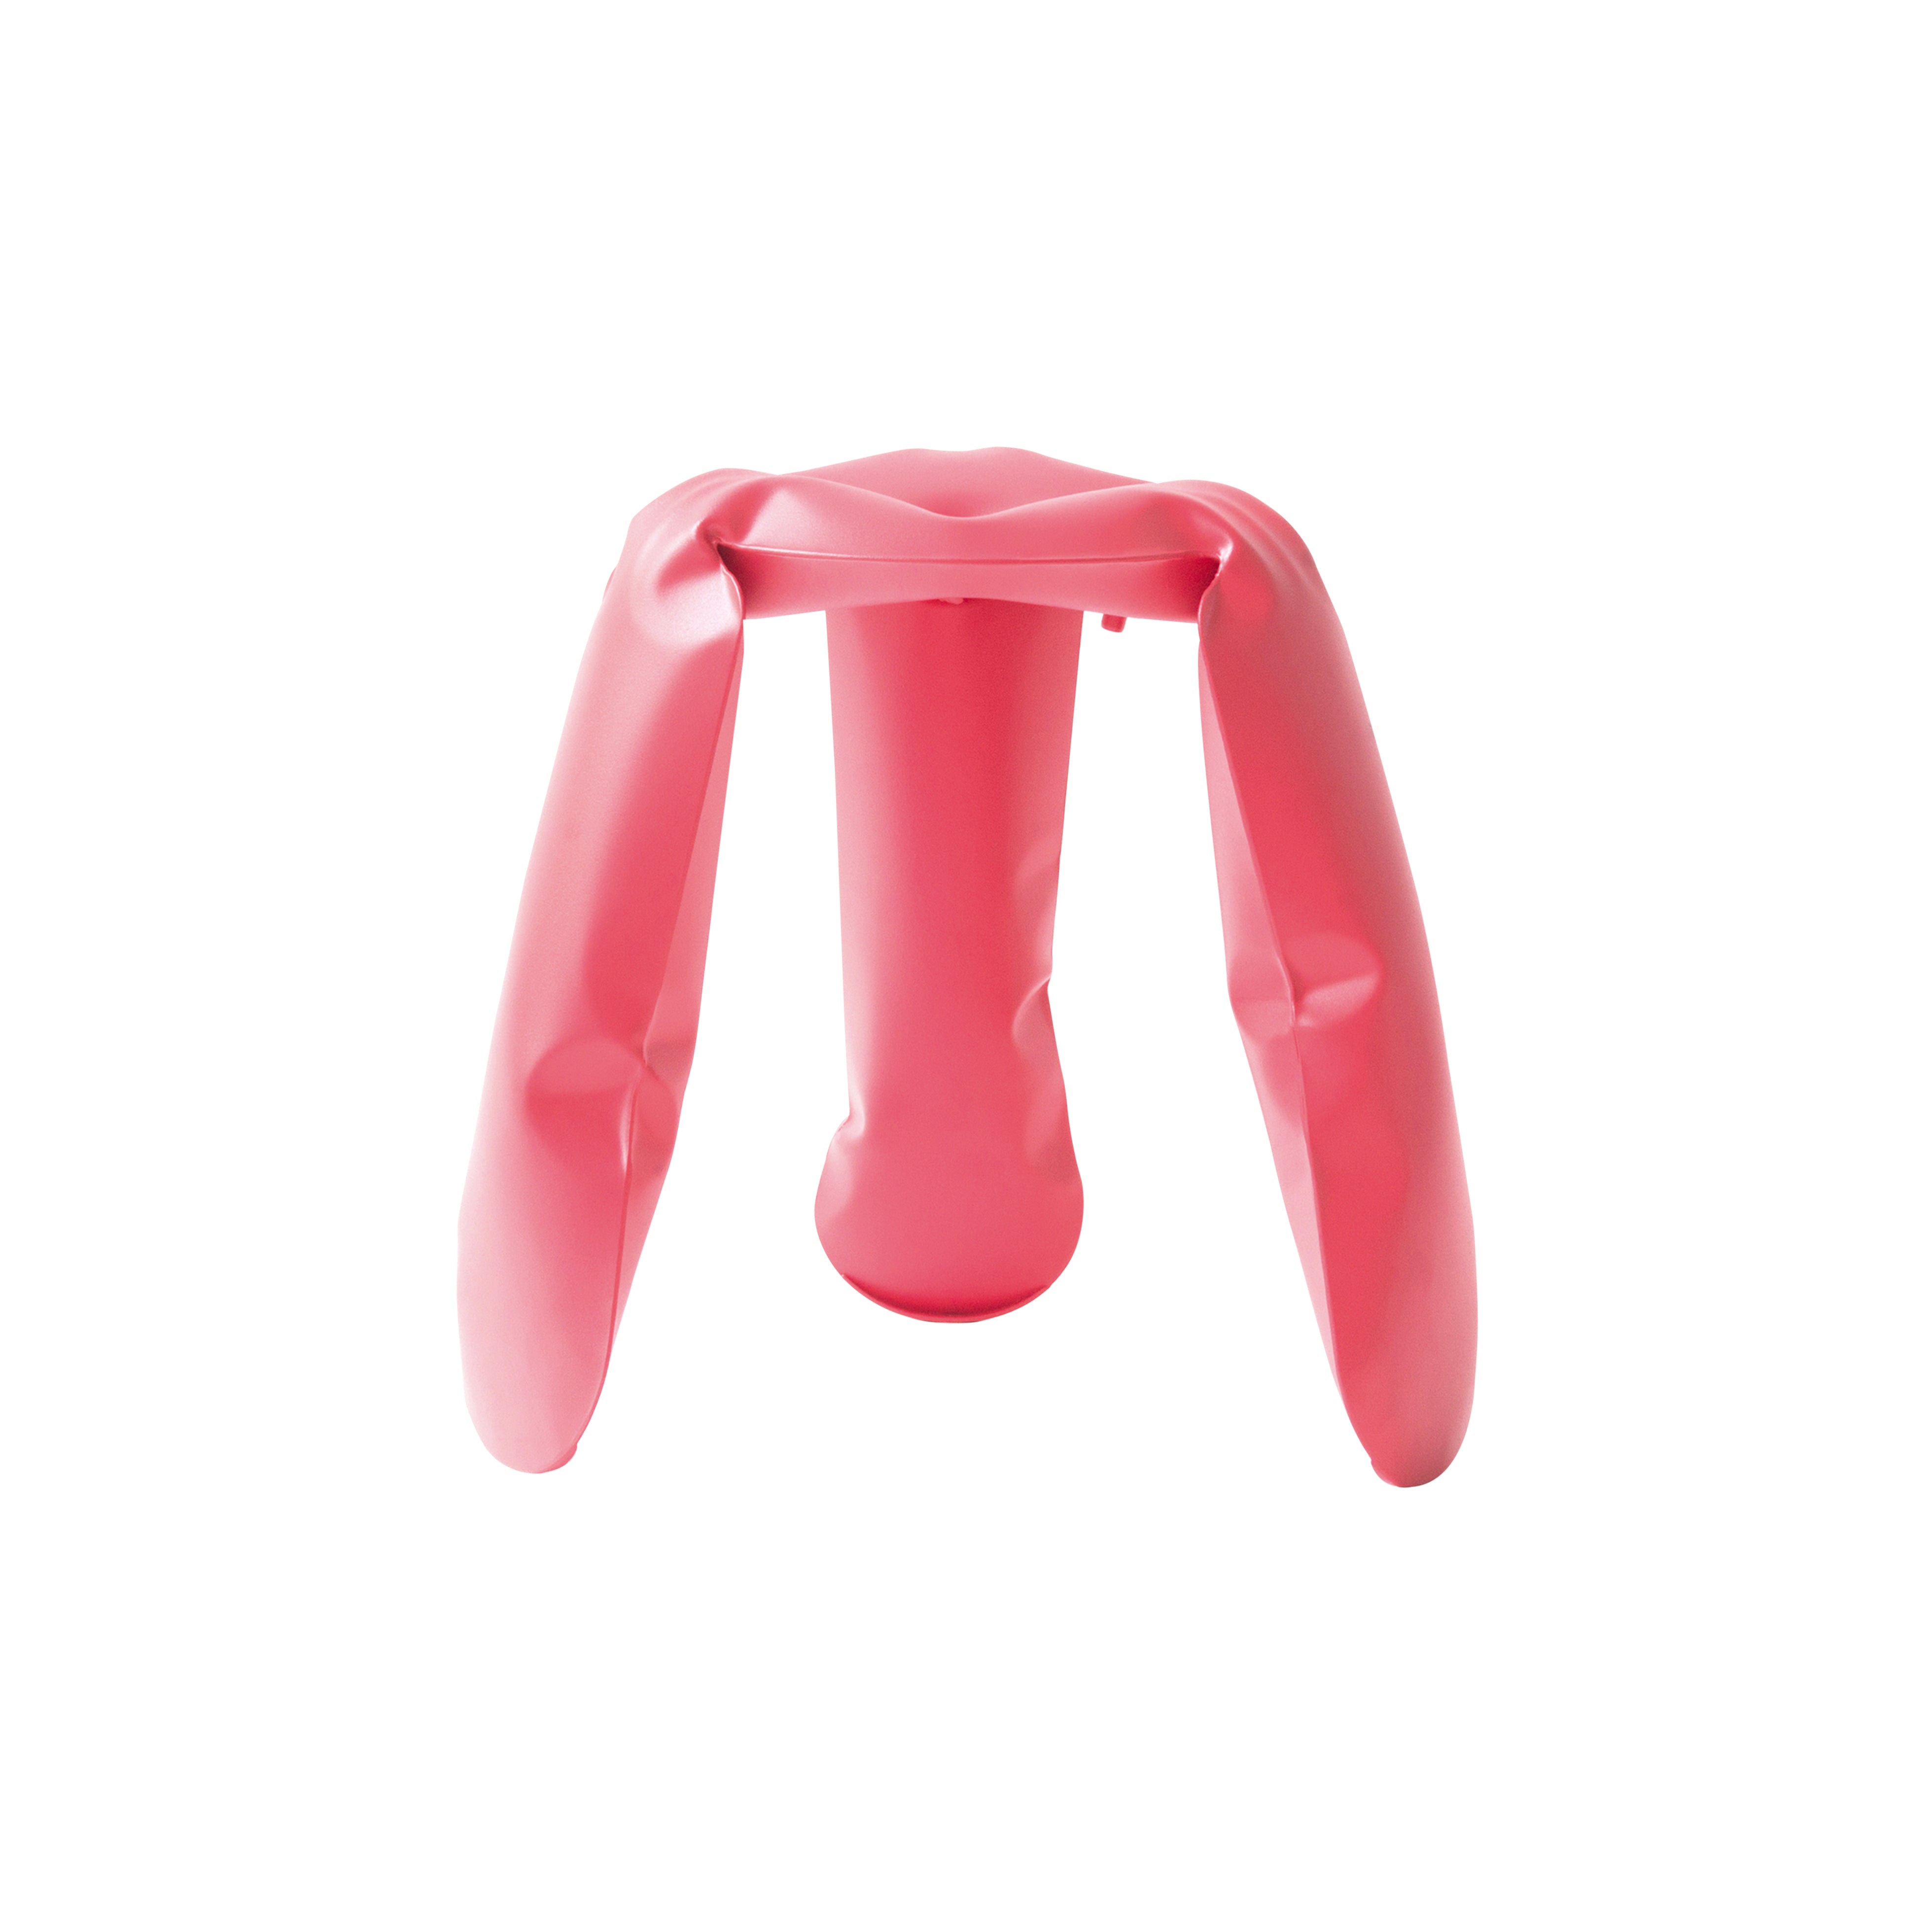 Plopp Metal Mini Footstool: Strawberry Red Carbon Steel